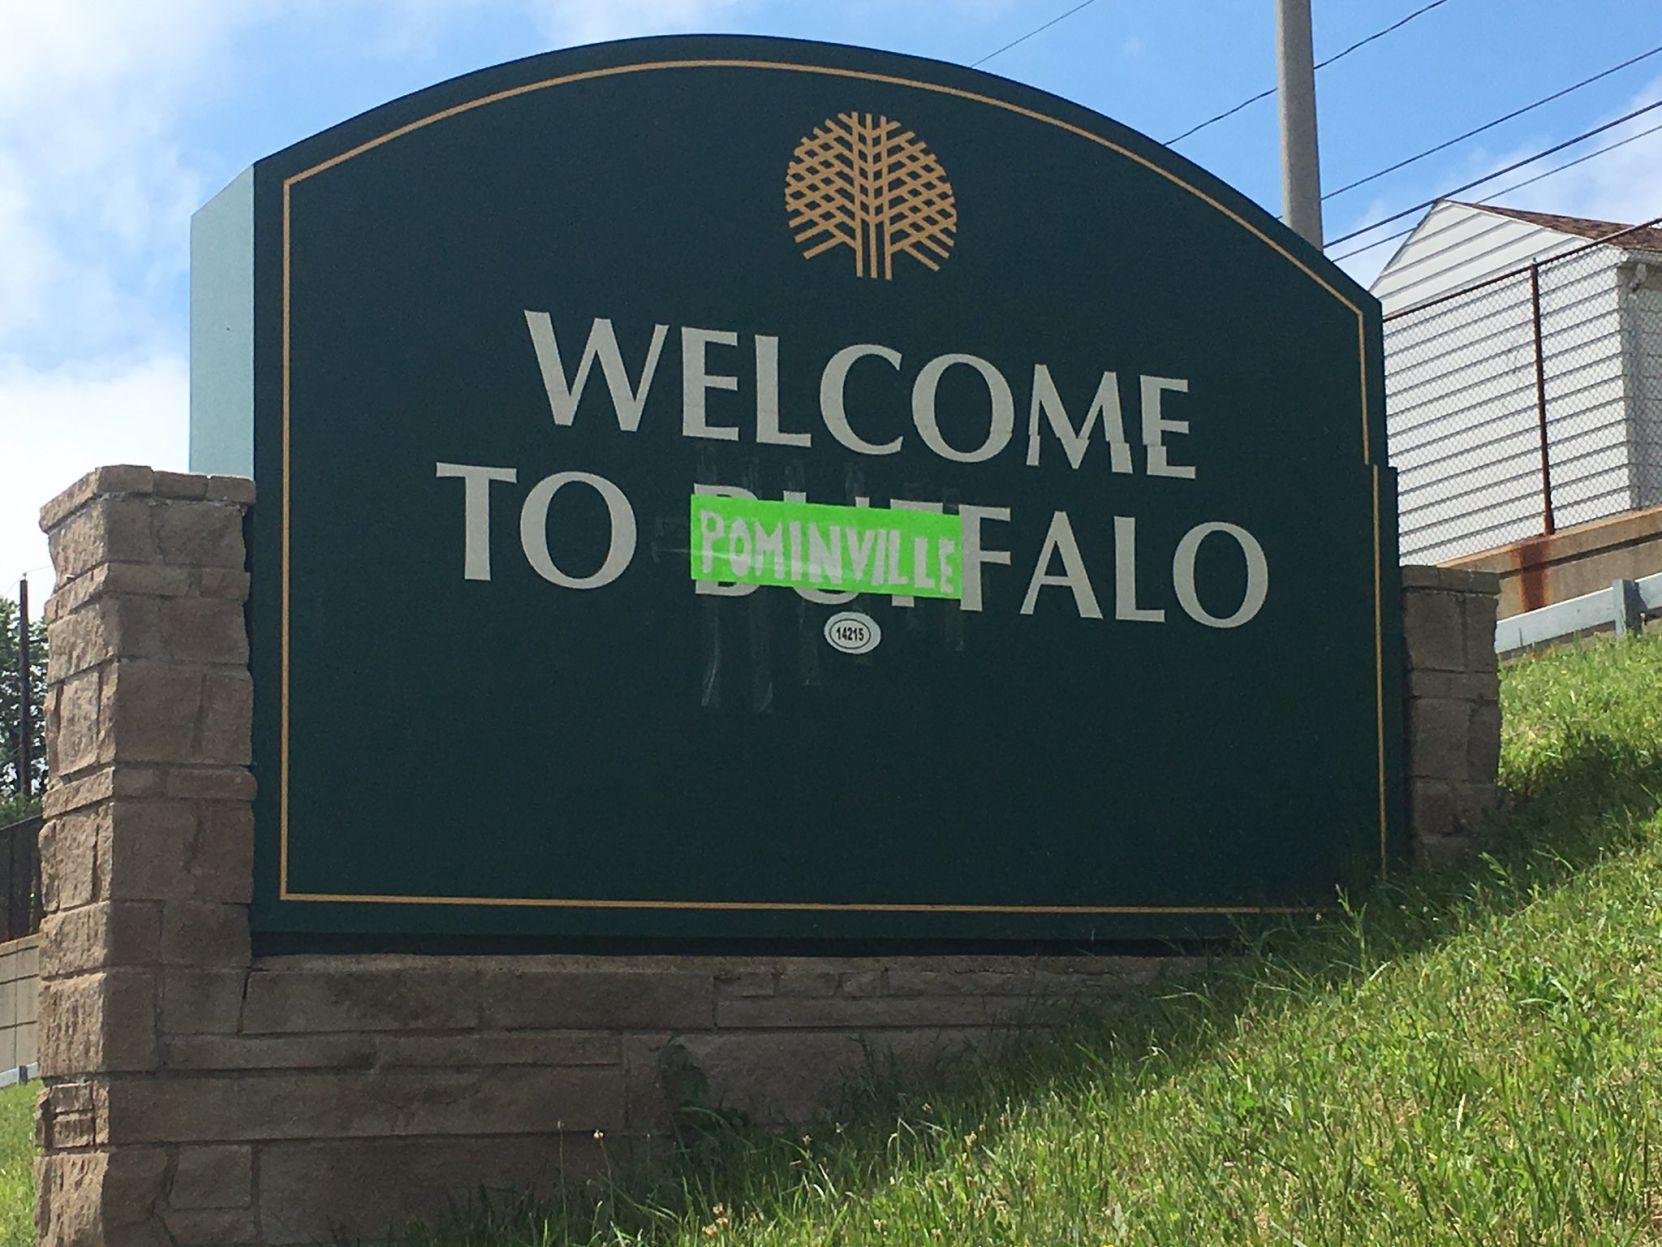 Buffalo says welcome (back) to Pominville | Buffalo Sabres News buffalonews.com